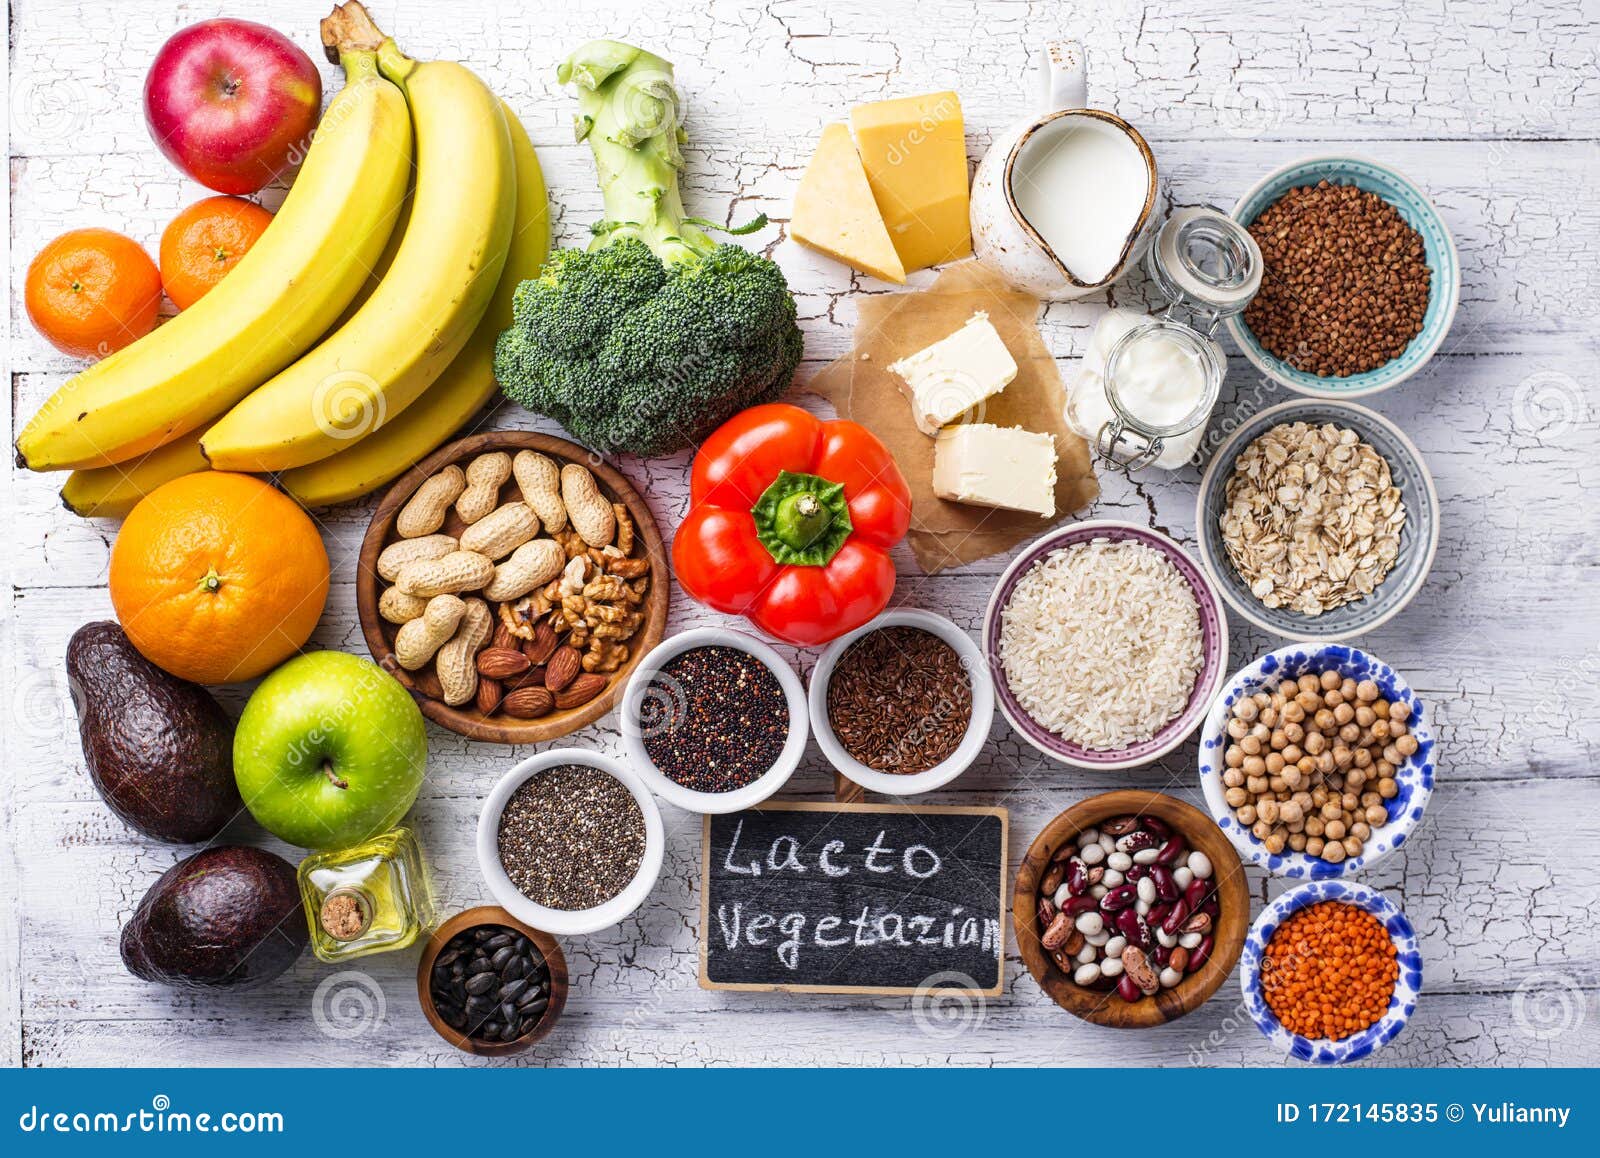 Lacto Vegetarian Diet Concept Healthy Food Stock Image Image Of Ingredient Milk 172145835,Model Train Layouts N Scale